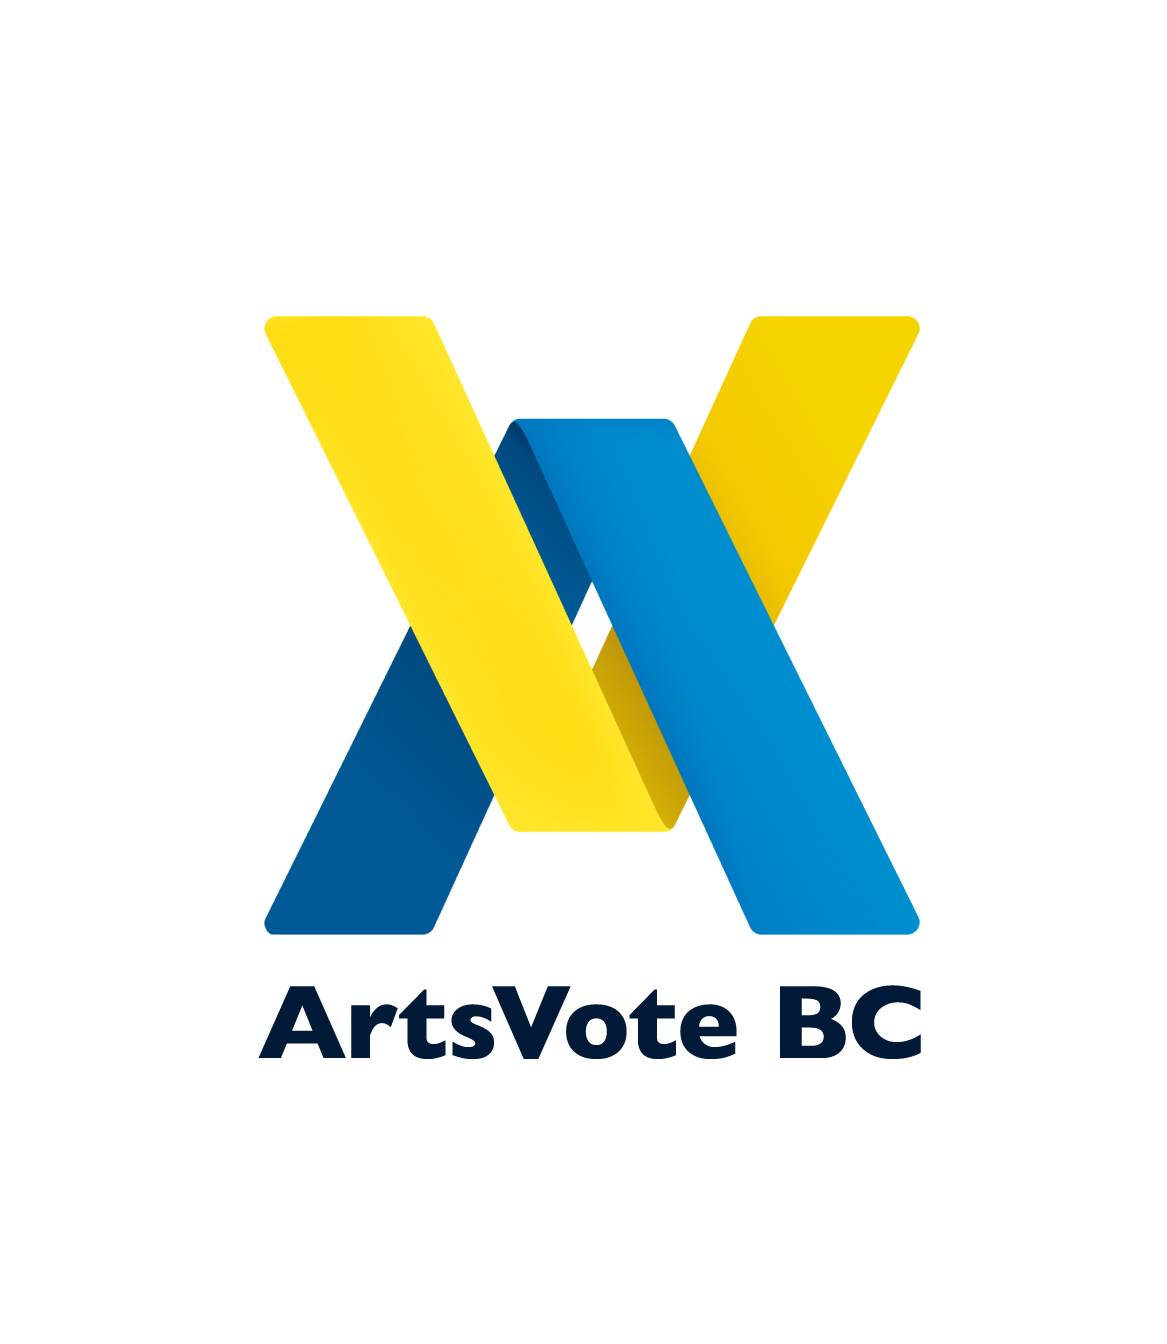 ArtsVote-BC-logo-revised-2017.jpg